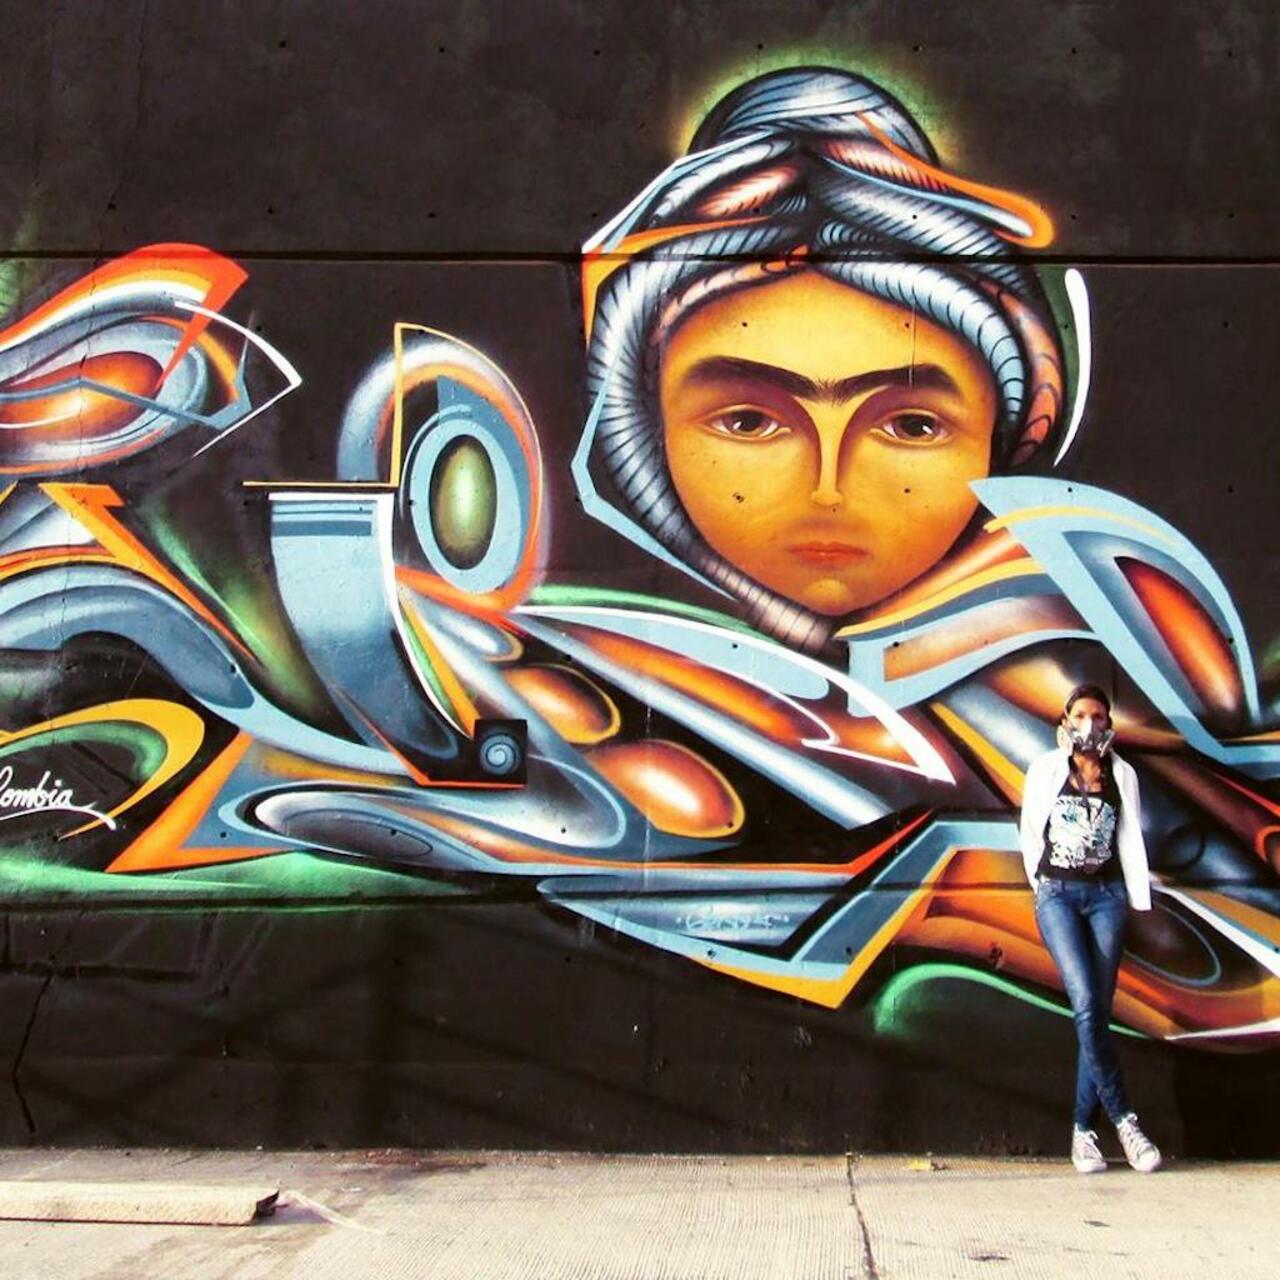 Artist Zurik from Colombia  #murals #art #streetart #urbanart #Graffiti #Zurik http://t.co/1vQBTRUTME